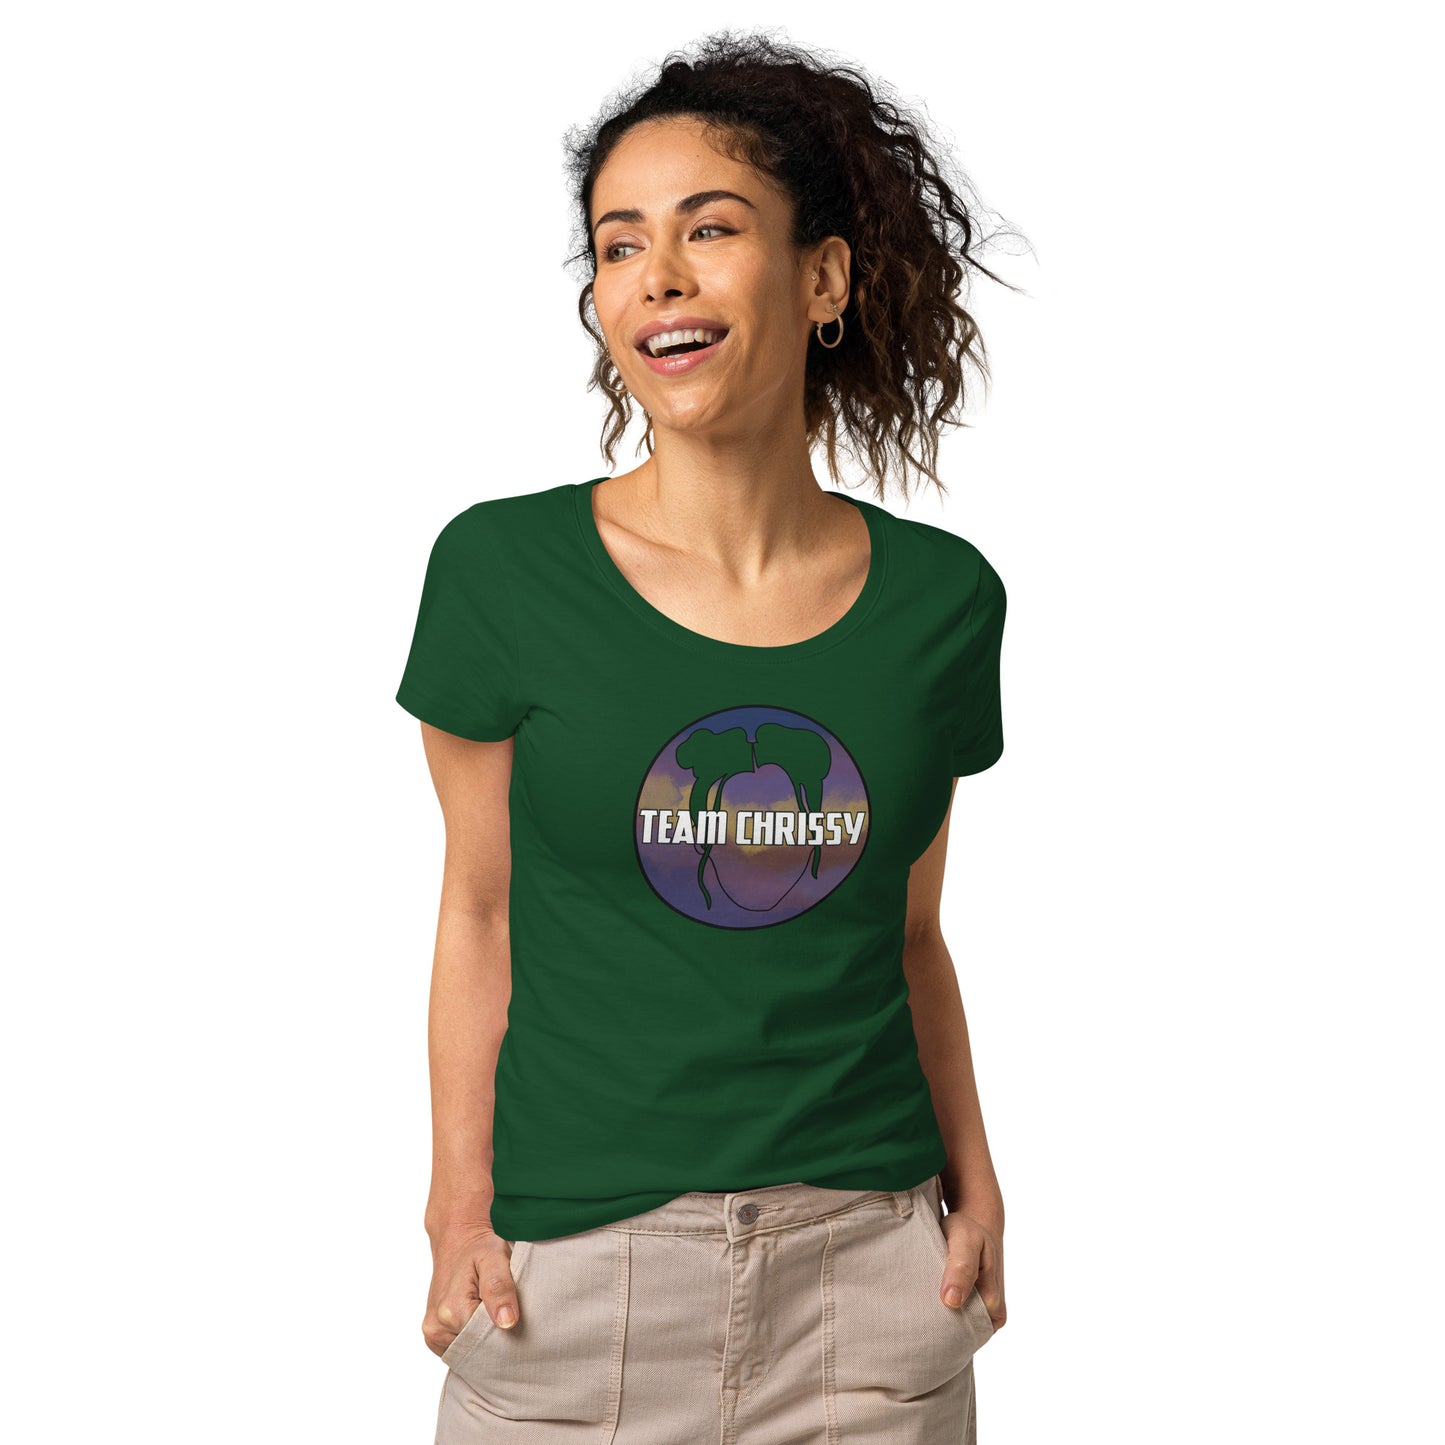 TEAM CHRISSY Women’s Basic Organic T-Shirt